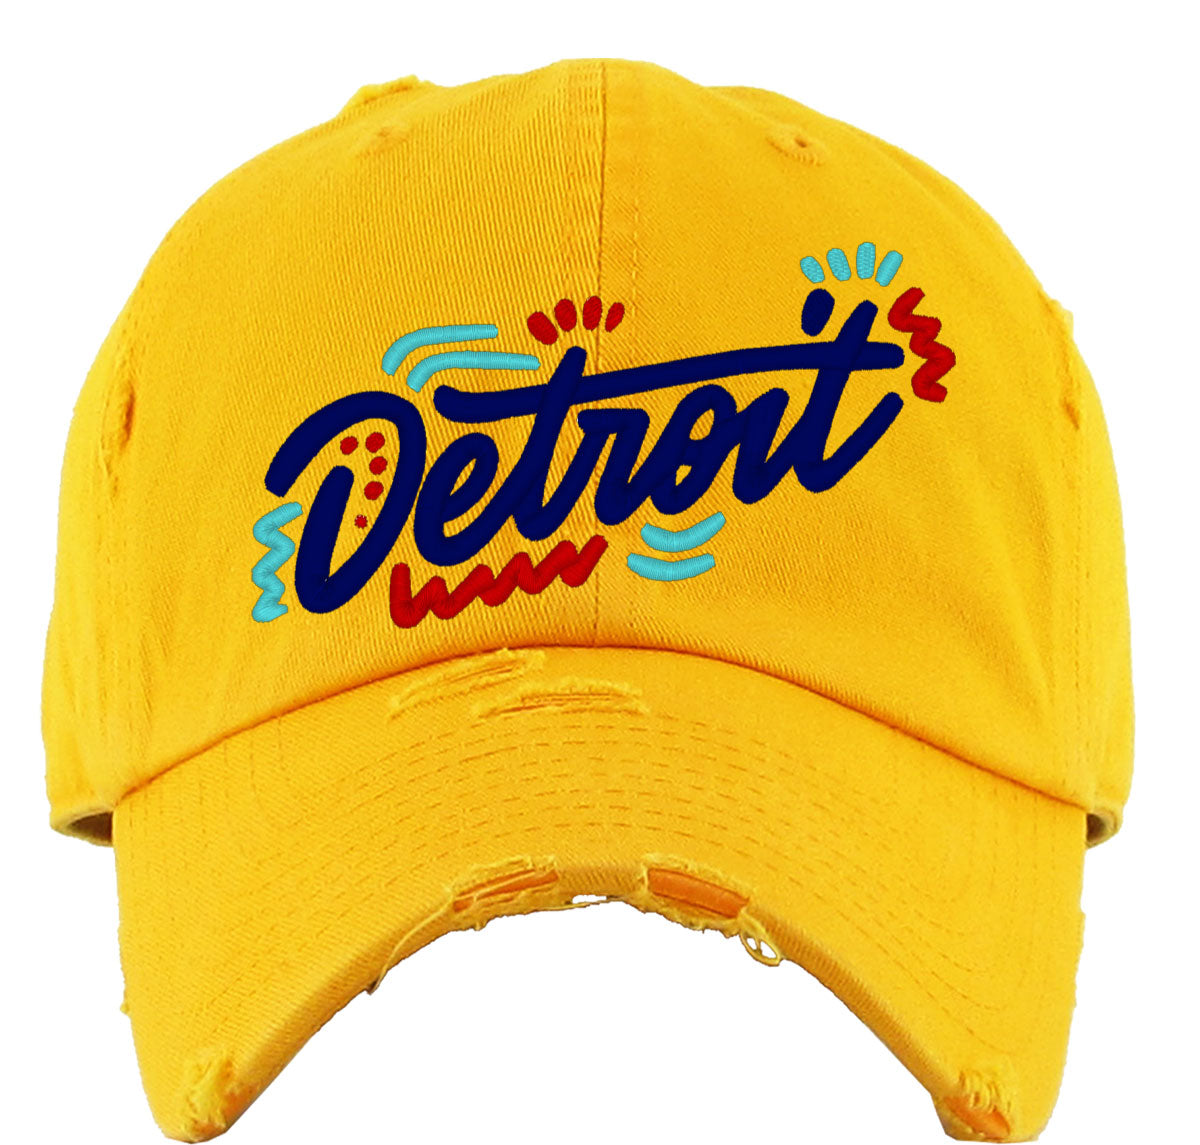 Detroit Michigan Vintage Baseball Cap